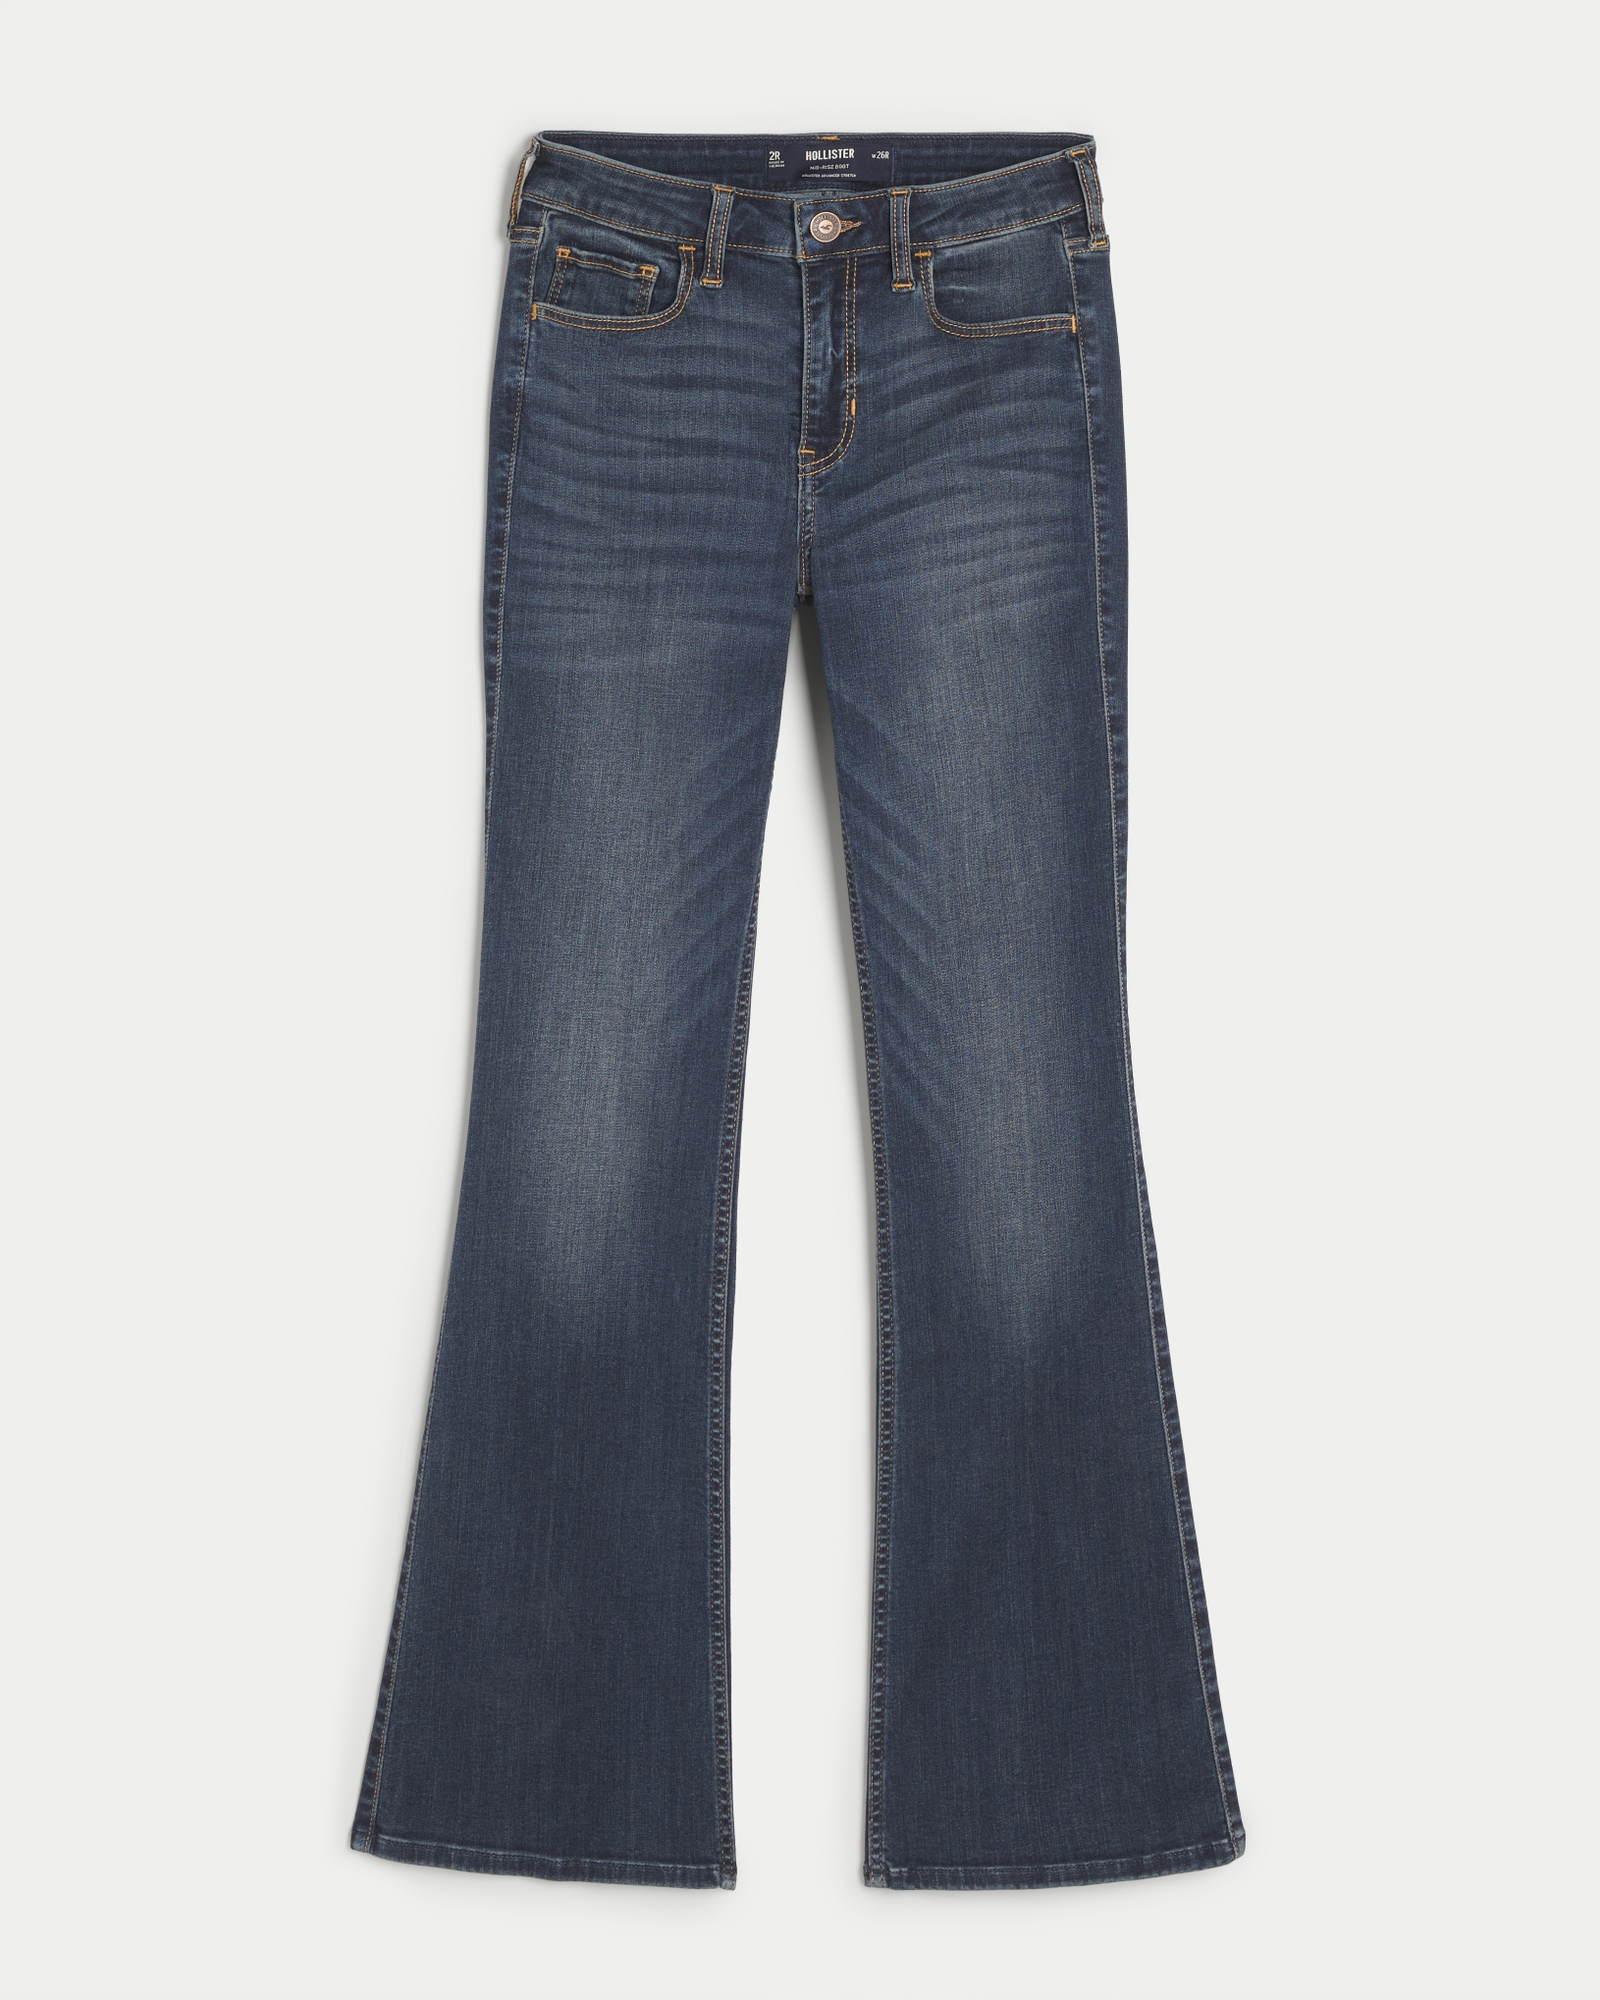 Hollister Flare Jeans Light Wash Denim Women's 3L Measures 29x33